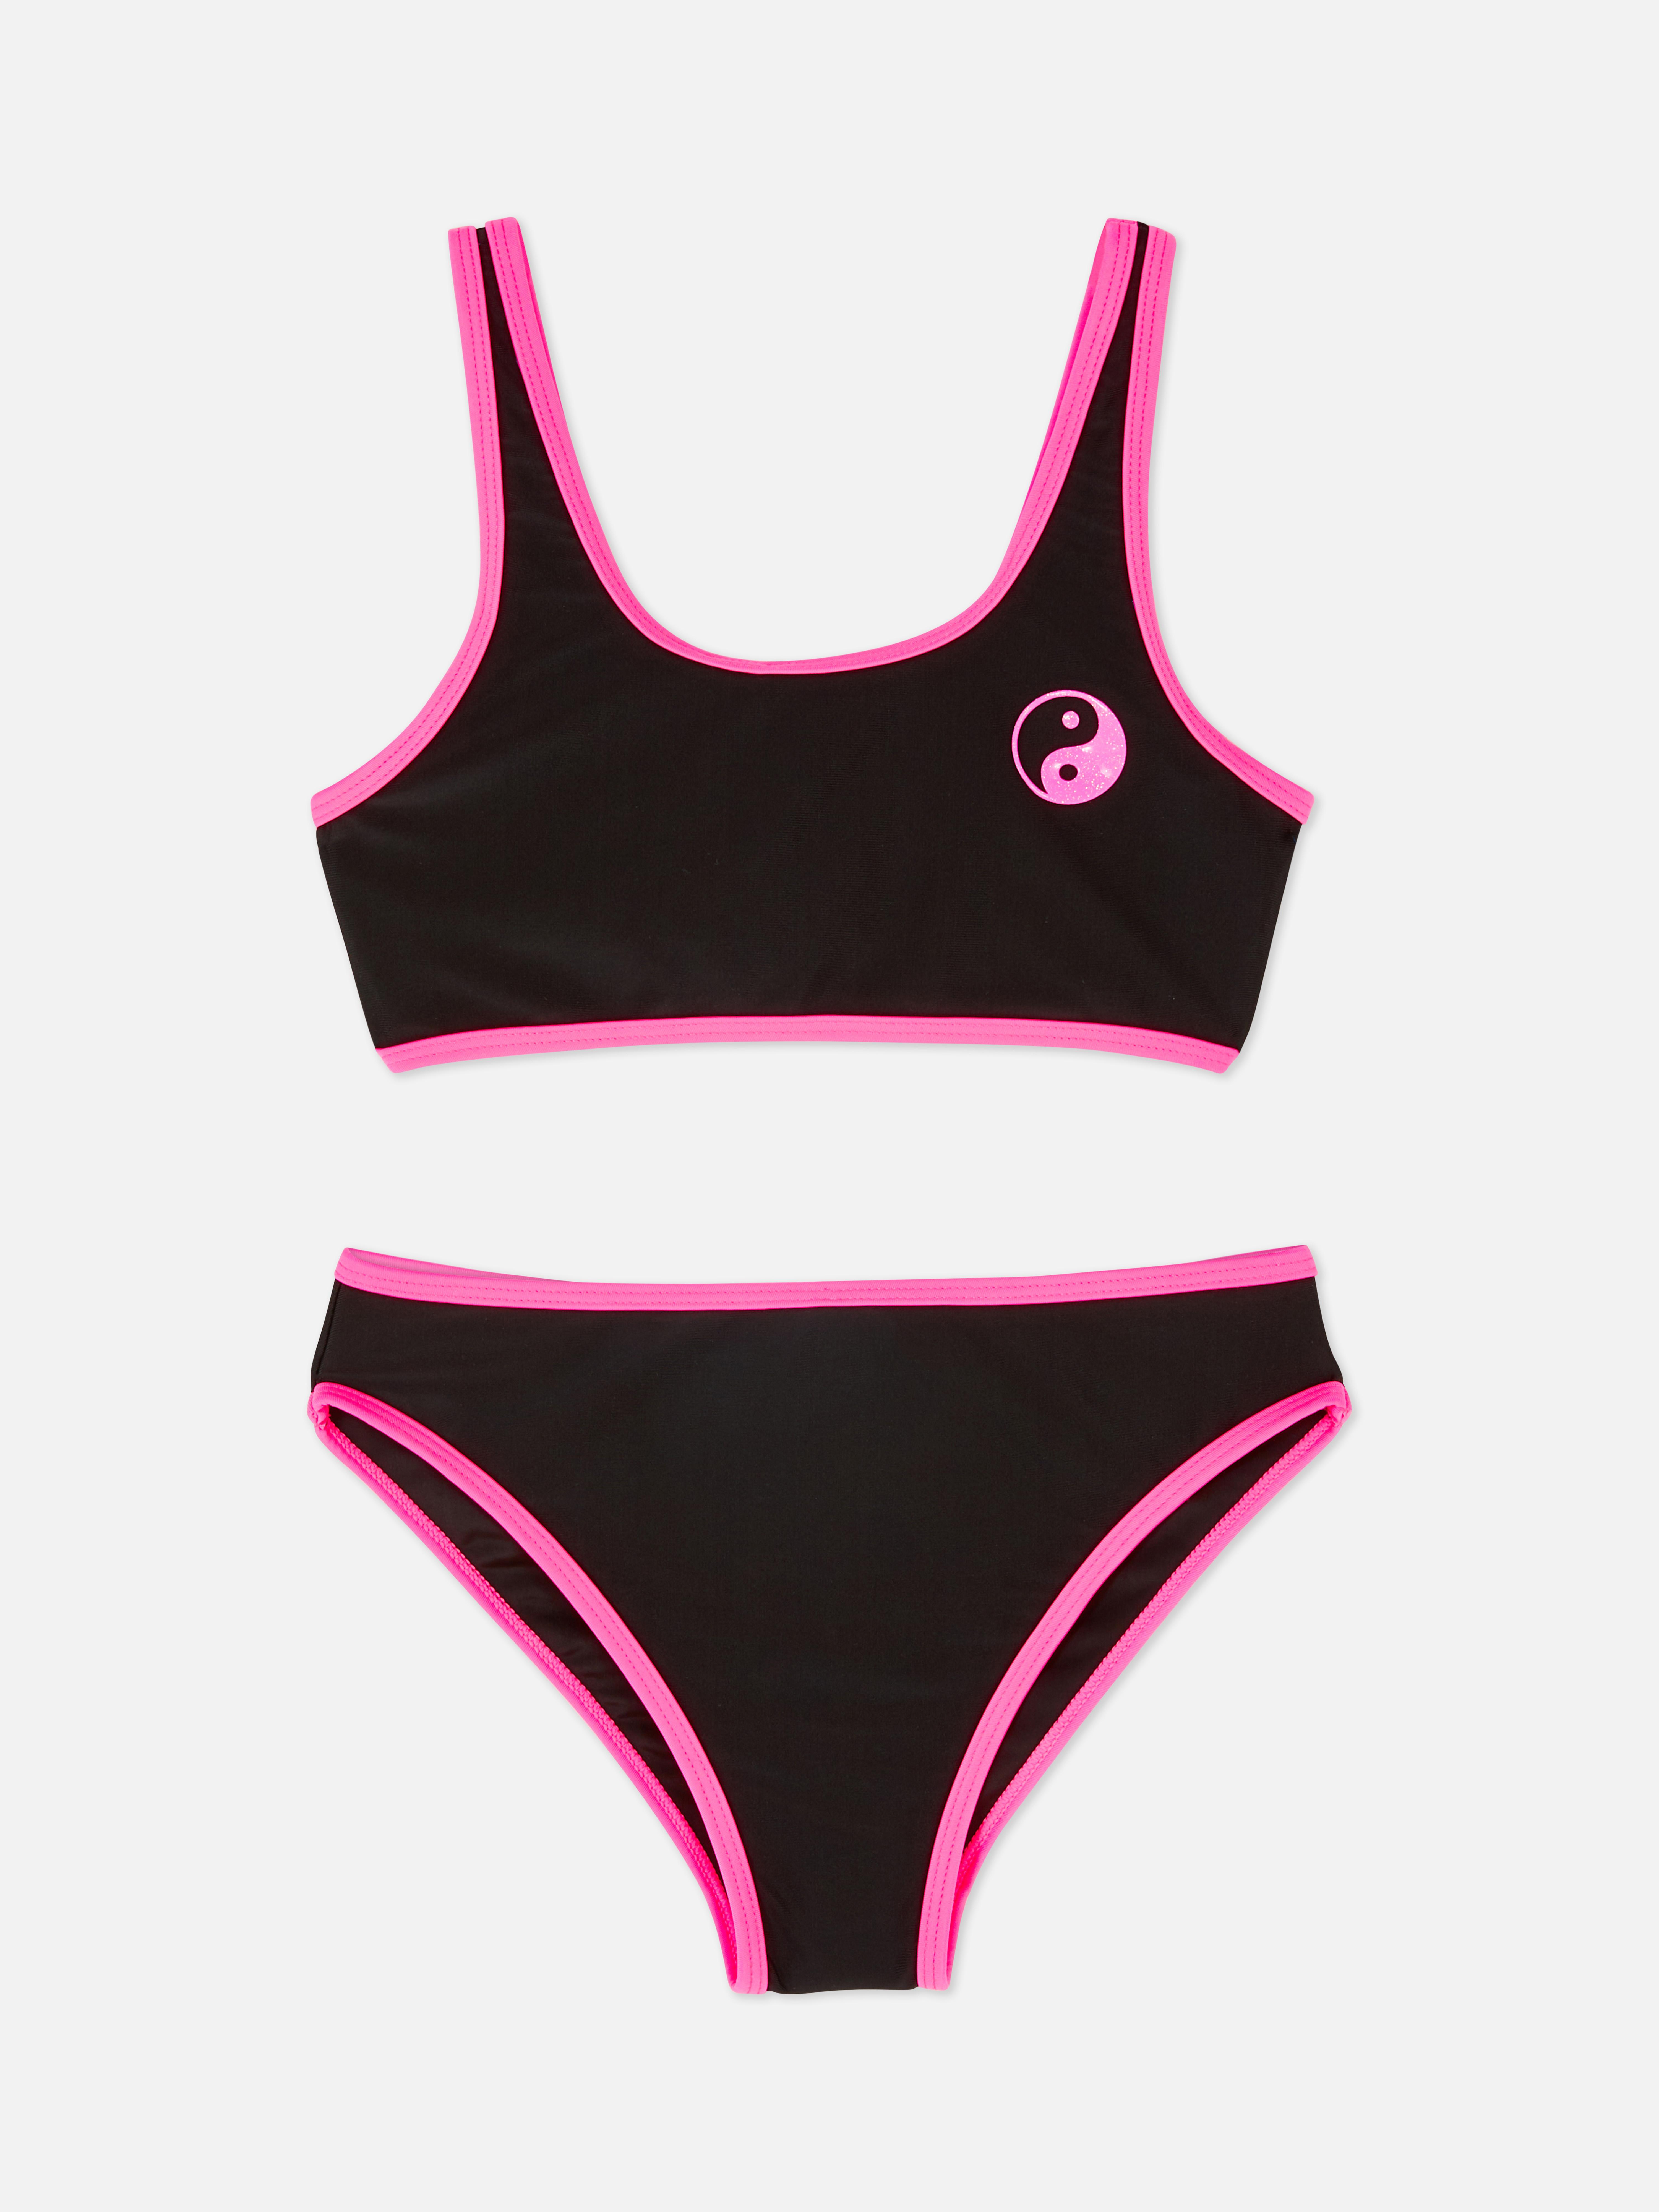 Popfeelings Deep Pink Ruffled Swim Skirt Cute Bikini Set Solid Color Swimsuit  Bathing Suit, Black, Small : : Clothing, Shoes & Accessories